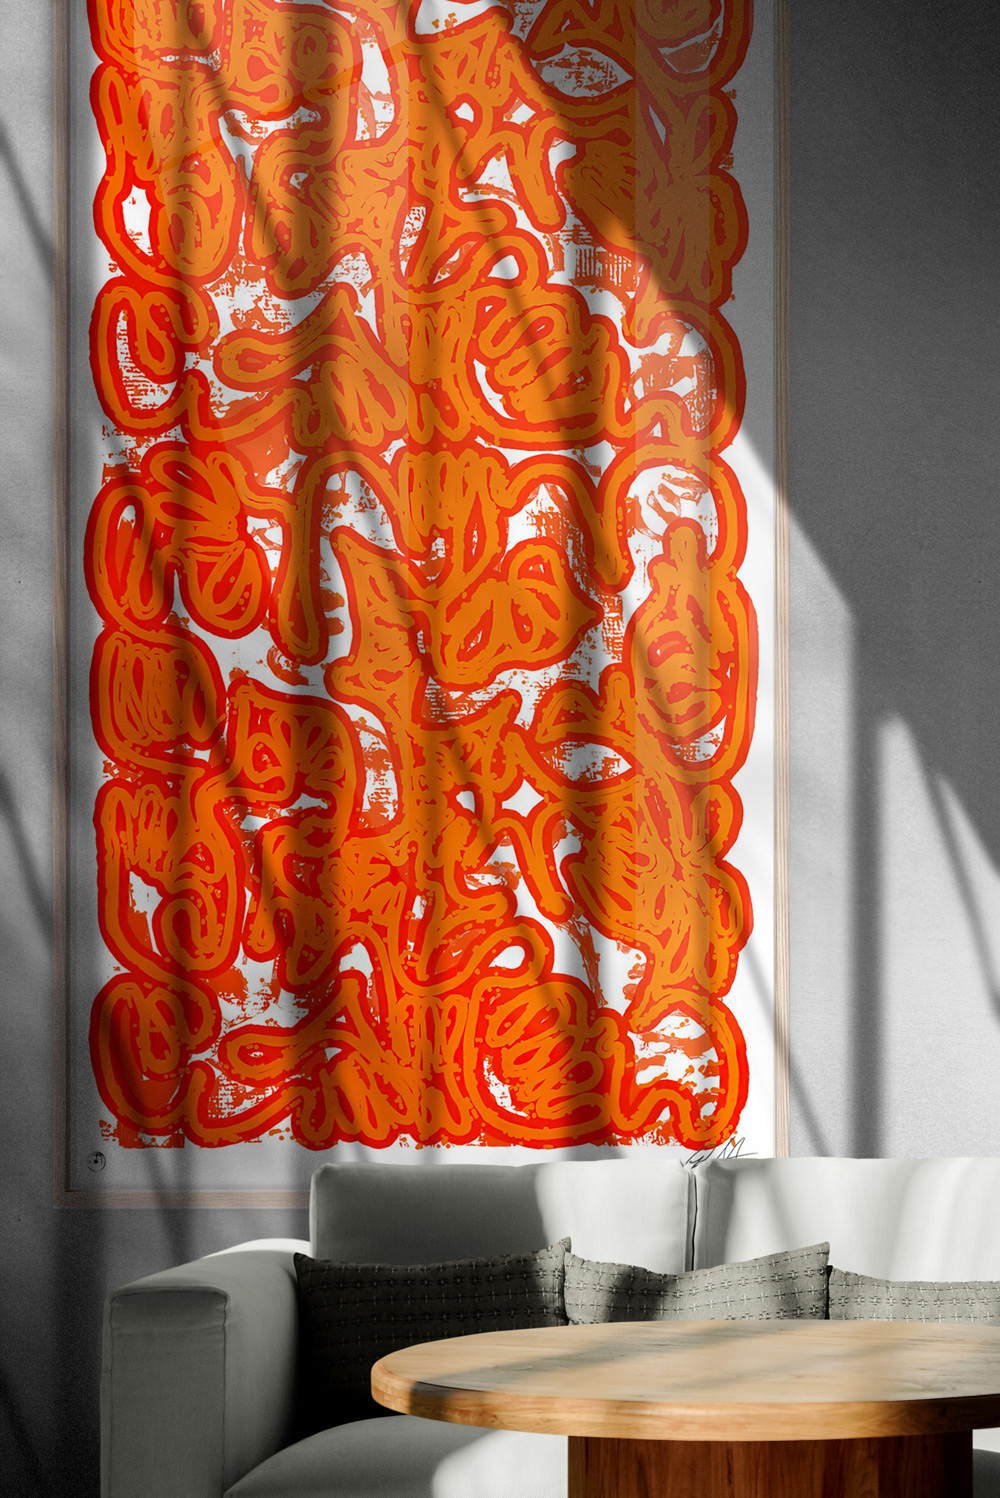 Robert Santoré “PAN AM 69 HERMÈS ORANGE”<br />
40 x 100in (101.6 x 254cm) Silkscreen, high gloss enamel on hot press paper